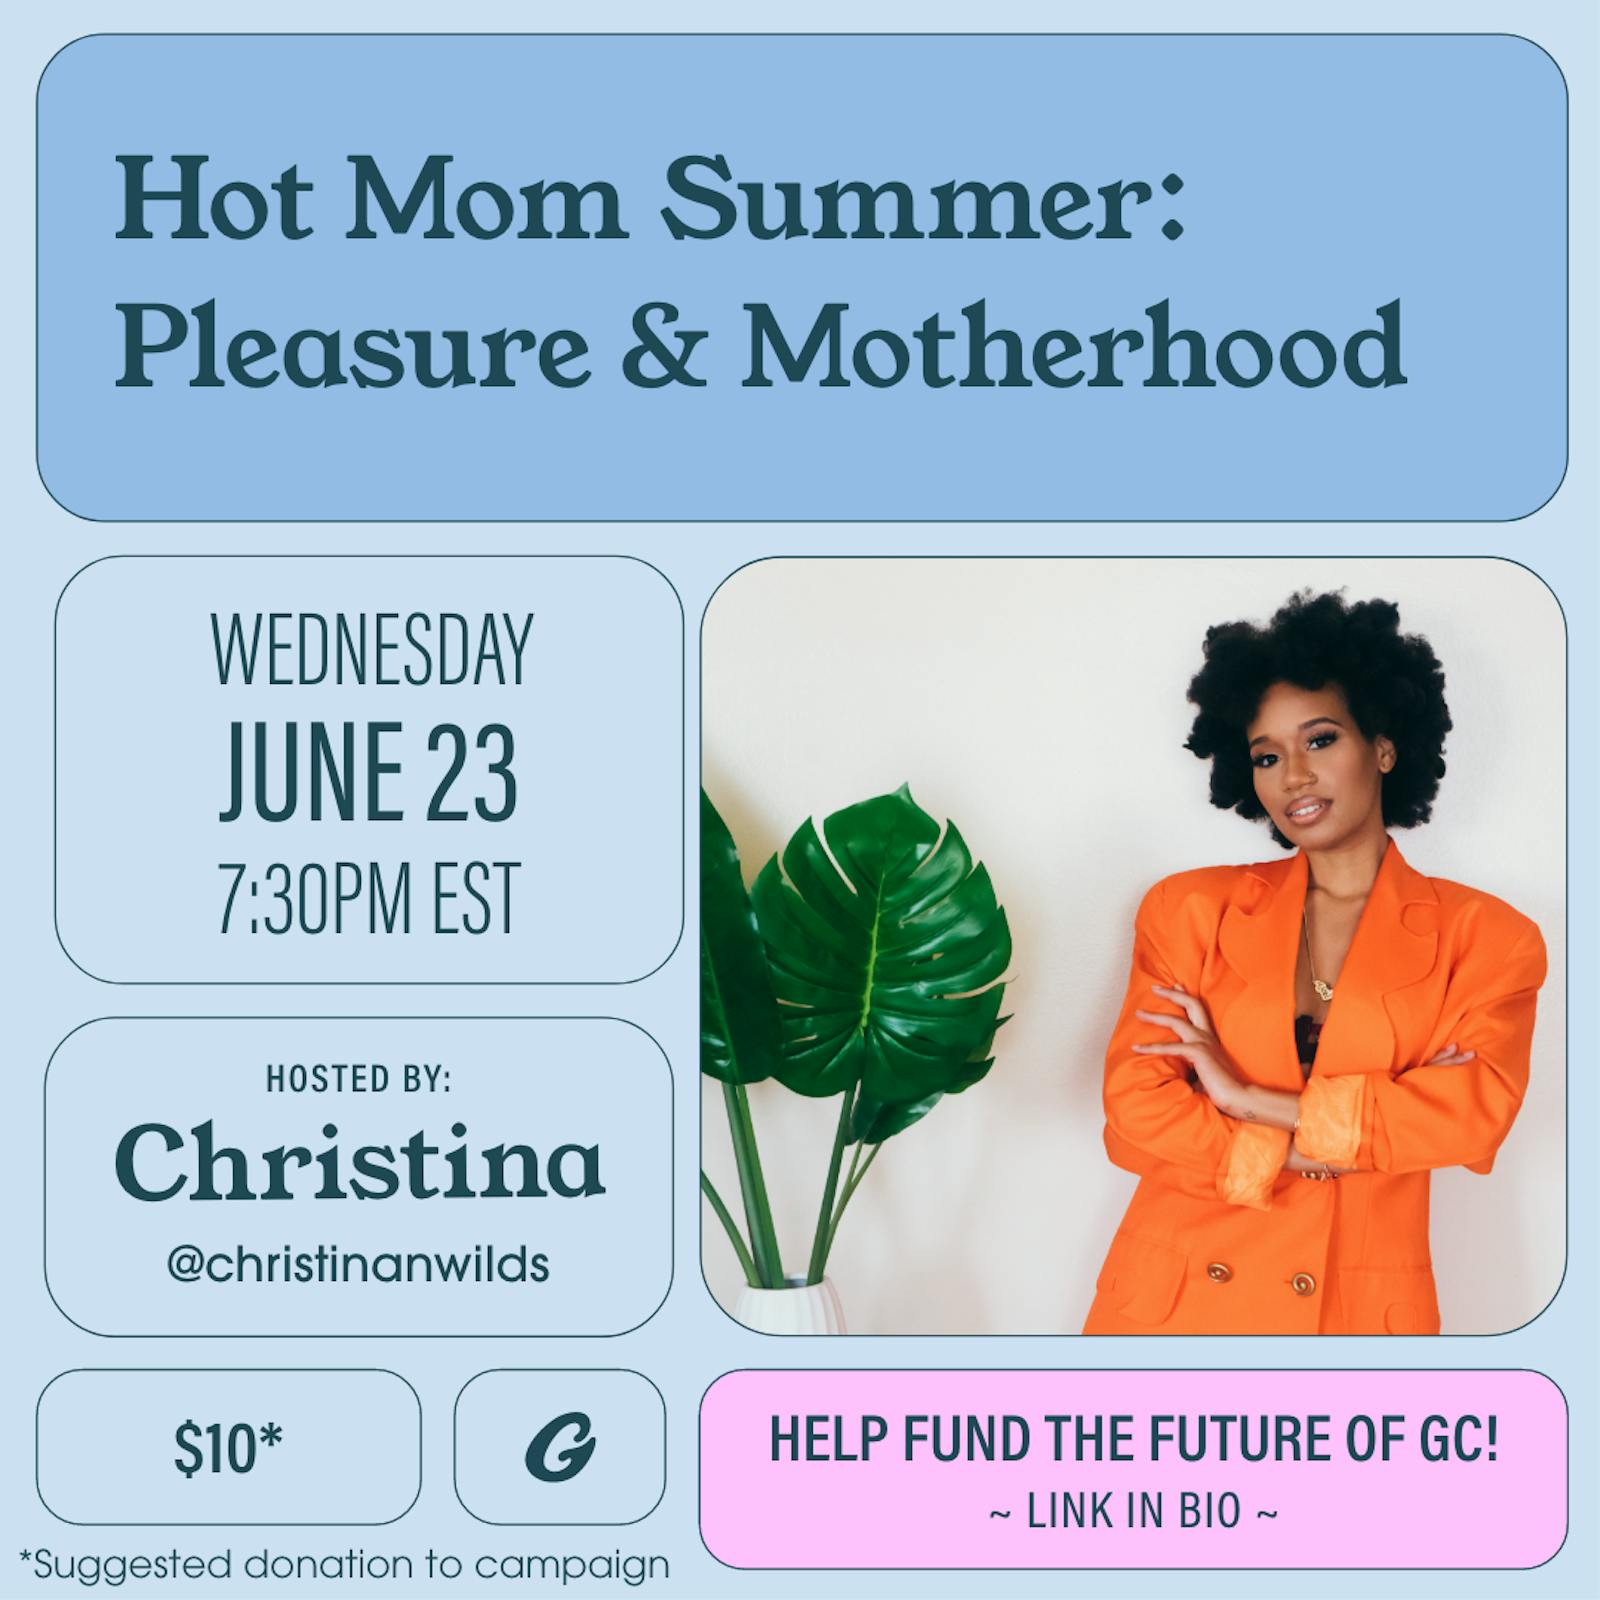 Hot Mom Summer: Pleasure & Motherhood